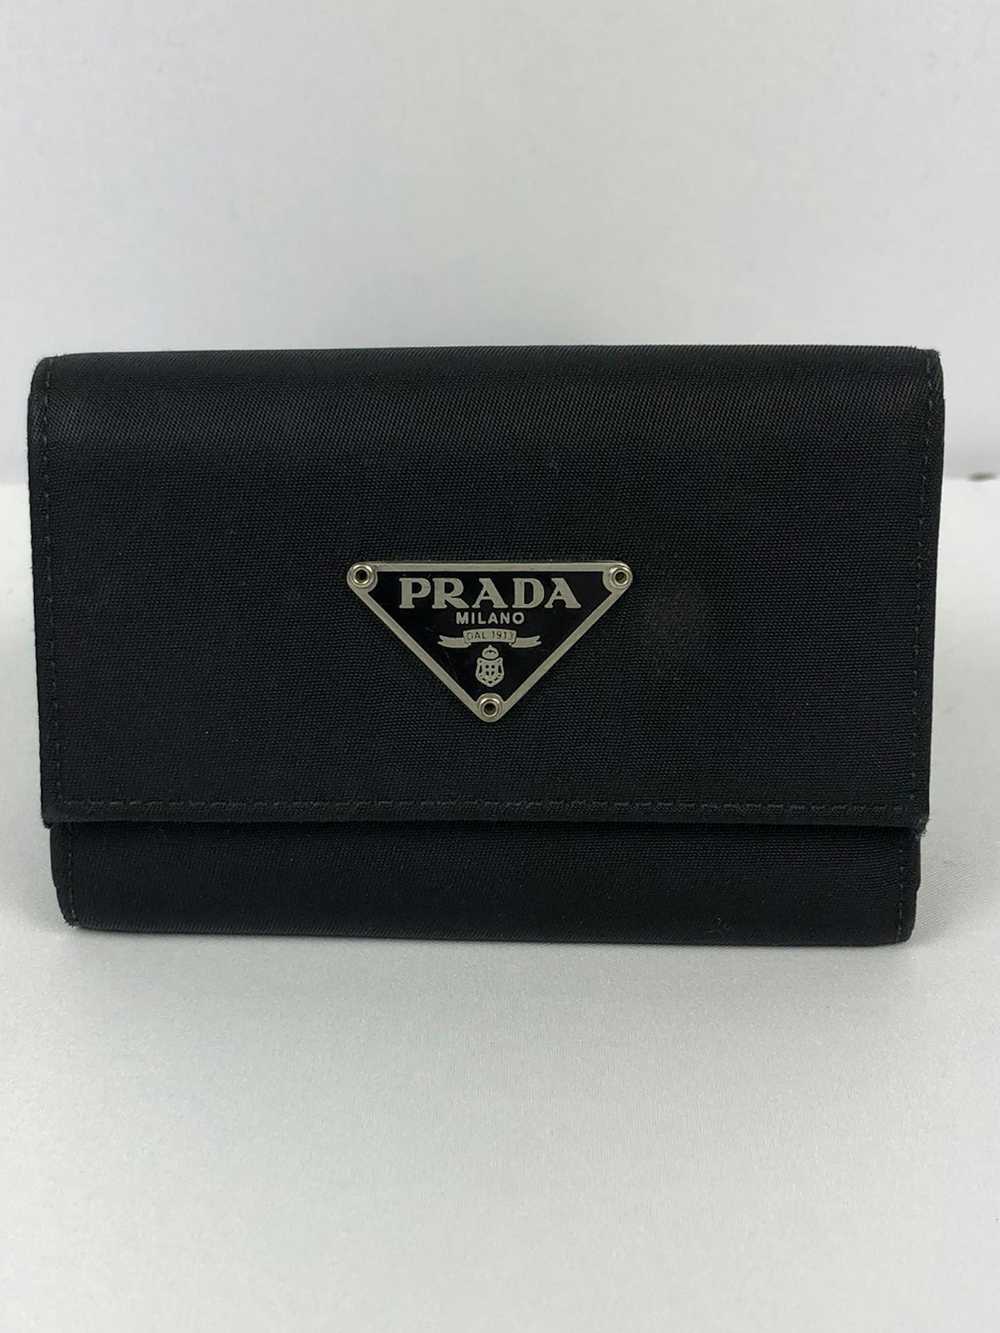 Prada Prada tessuto nero nylon key holder - image 1